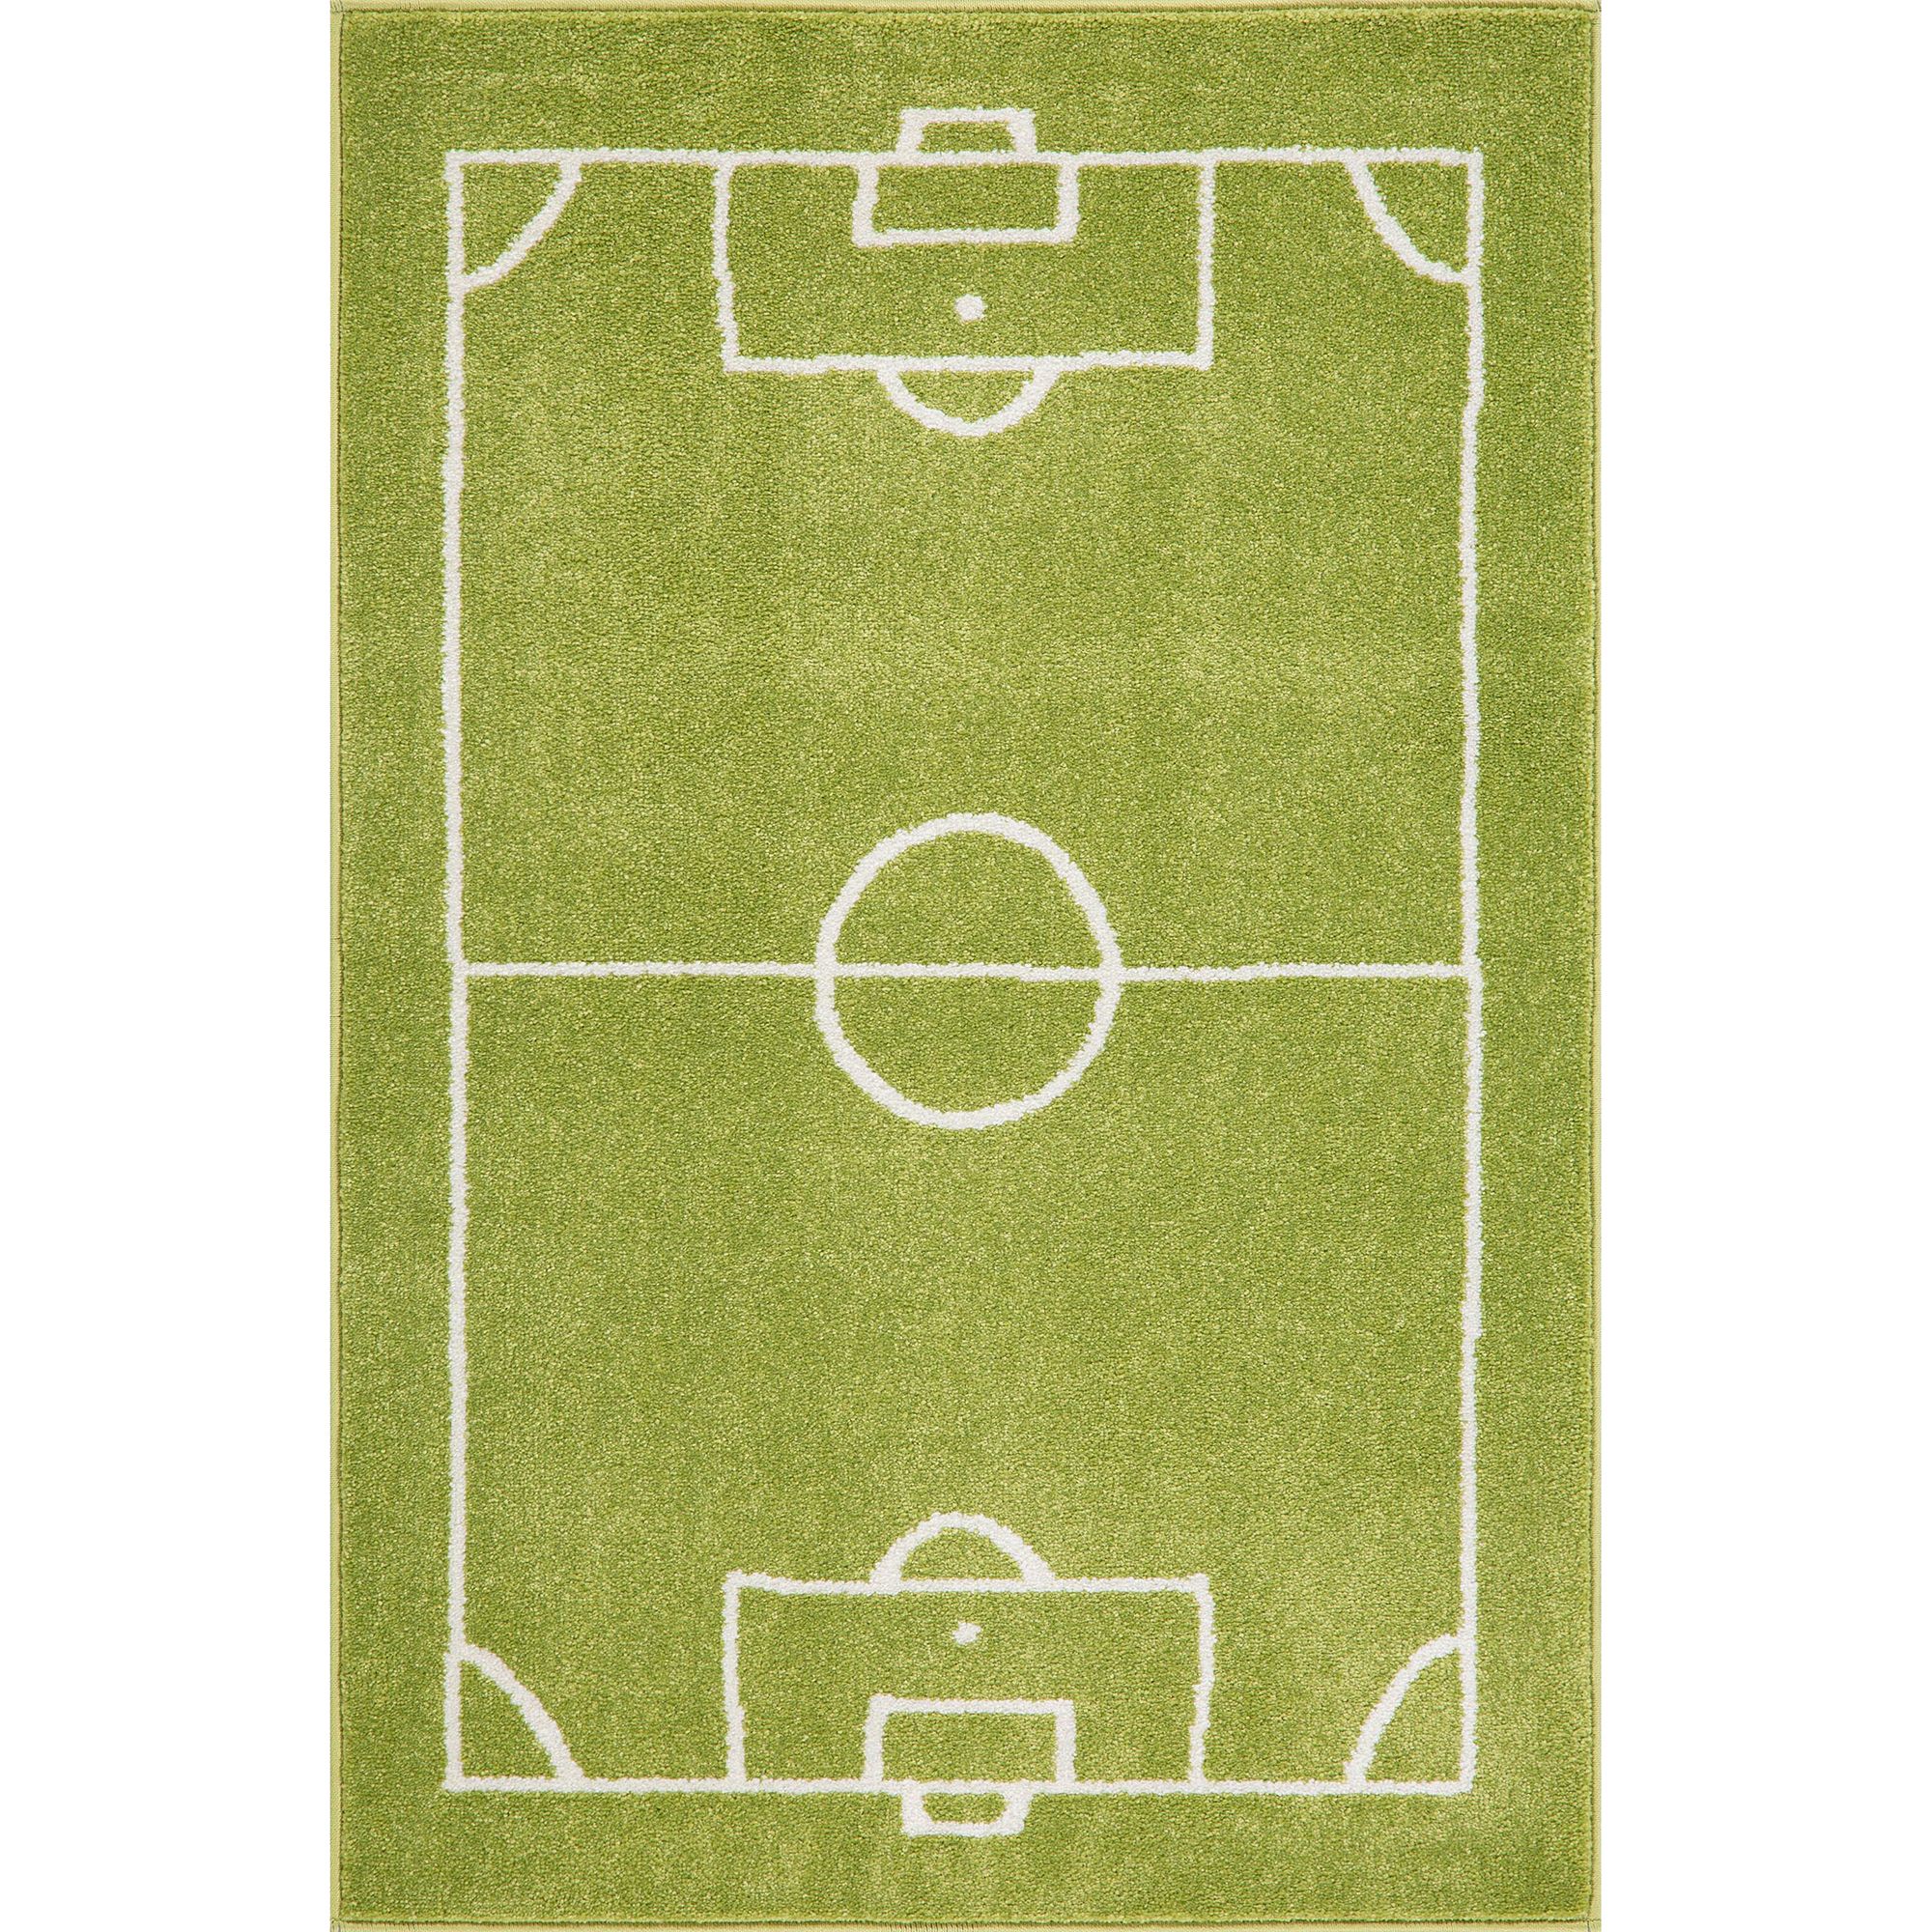 Football pitch Polypropylene Playmat, (W) 80cm x (L) 120cm